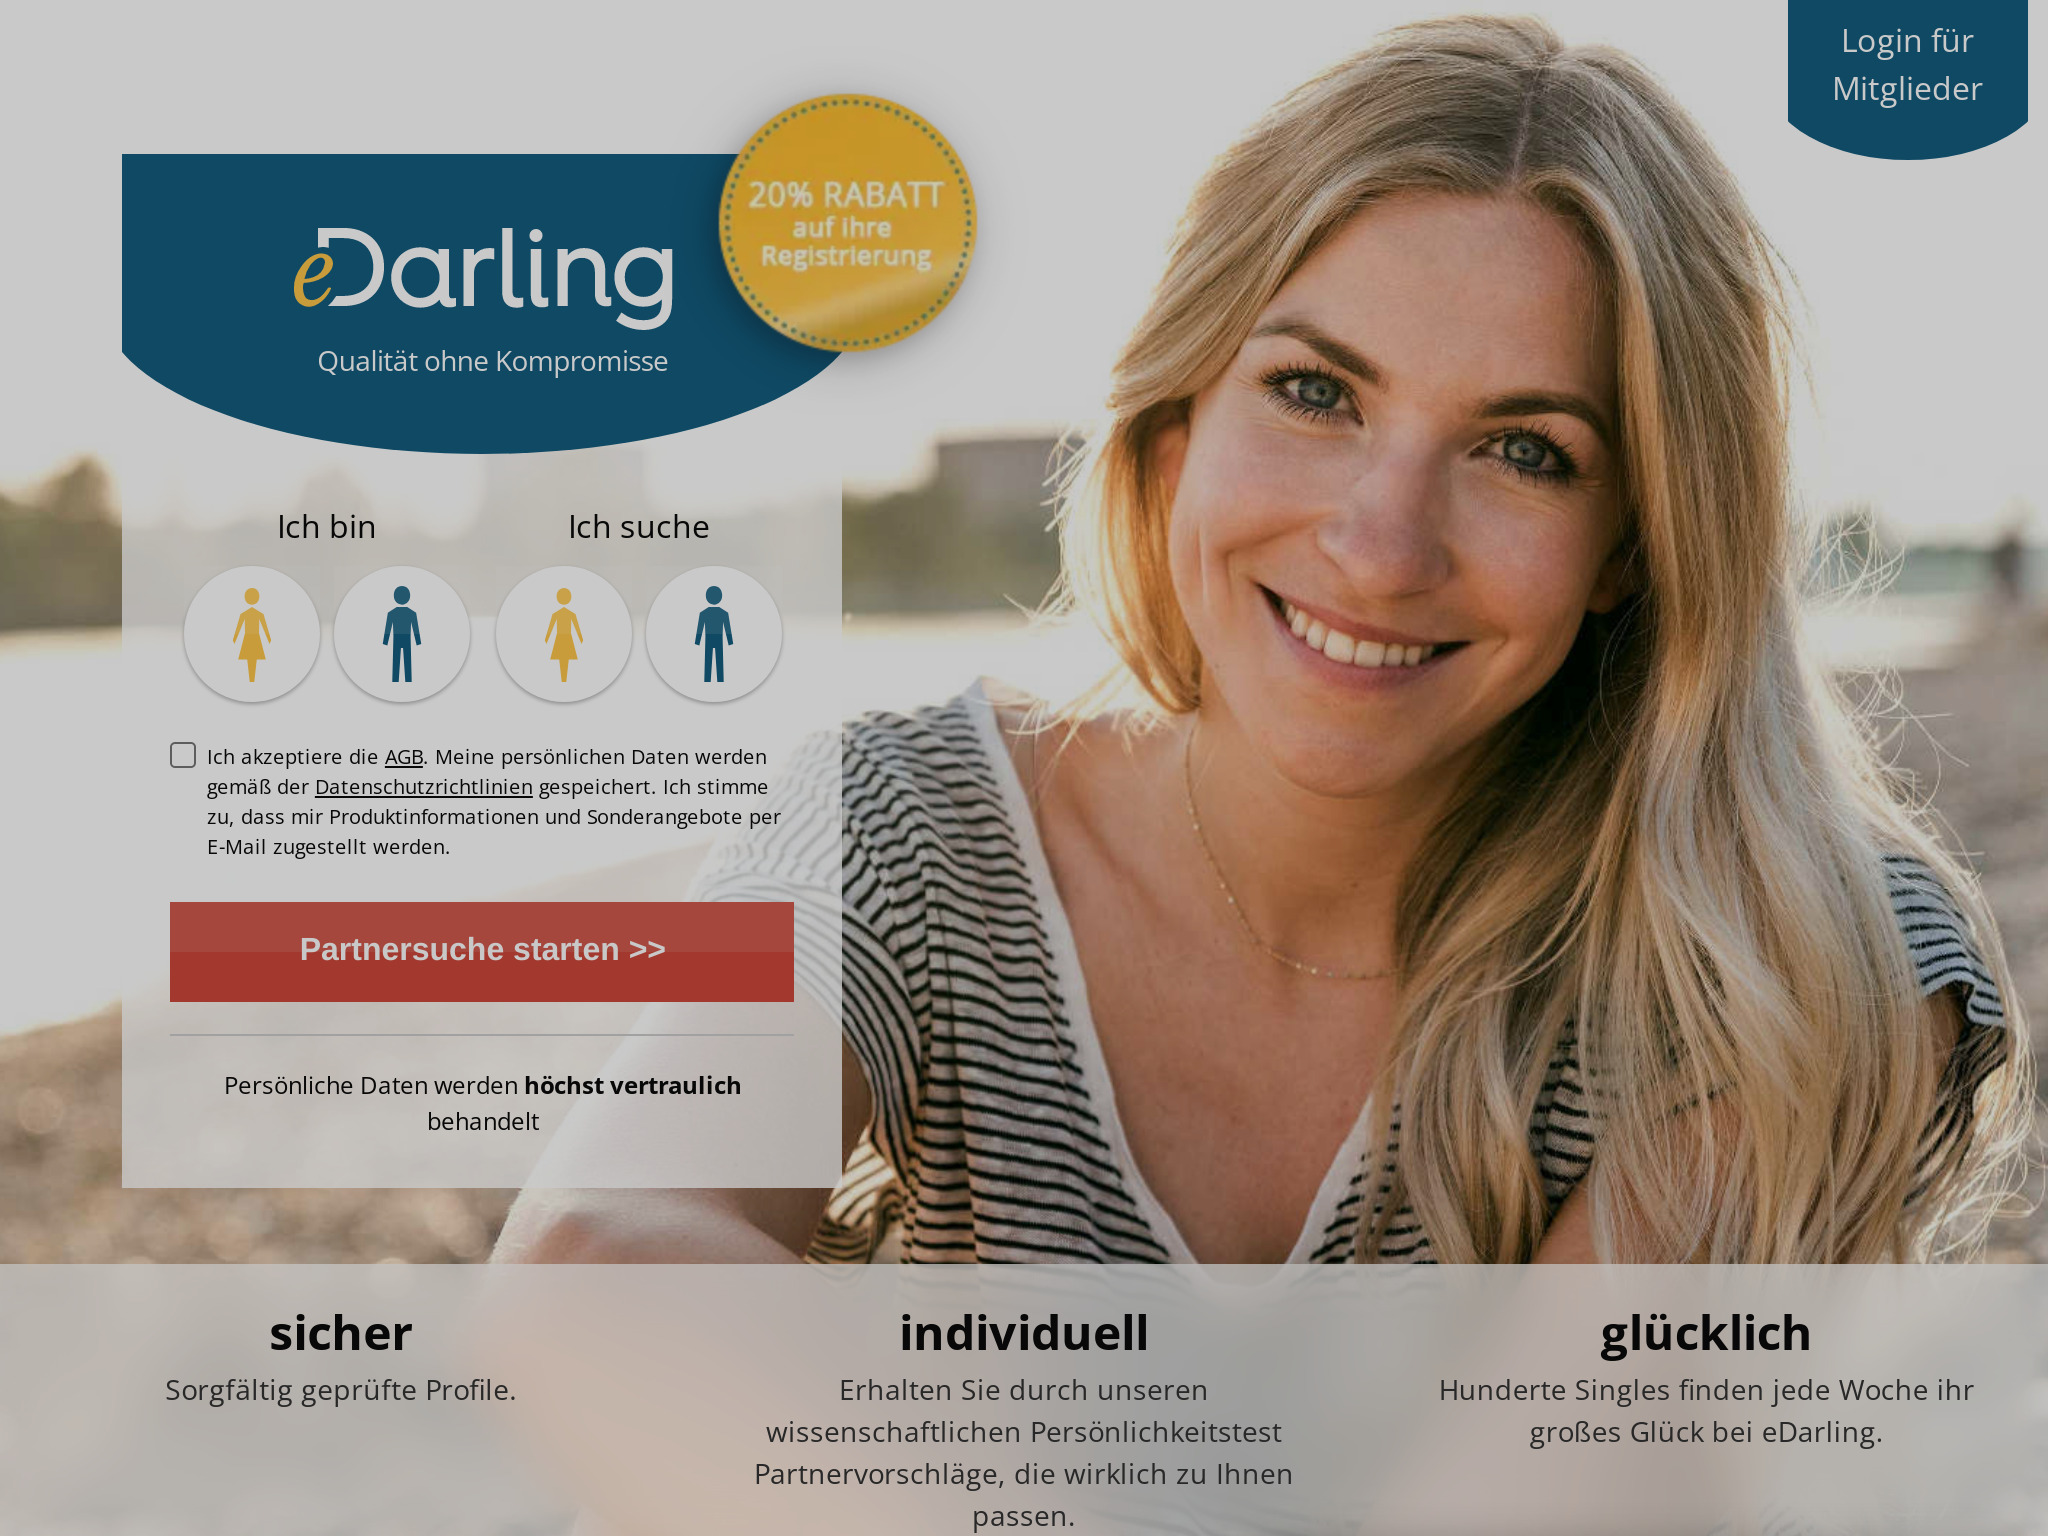 Finding Romance Online – eDarling Review